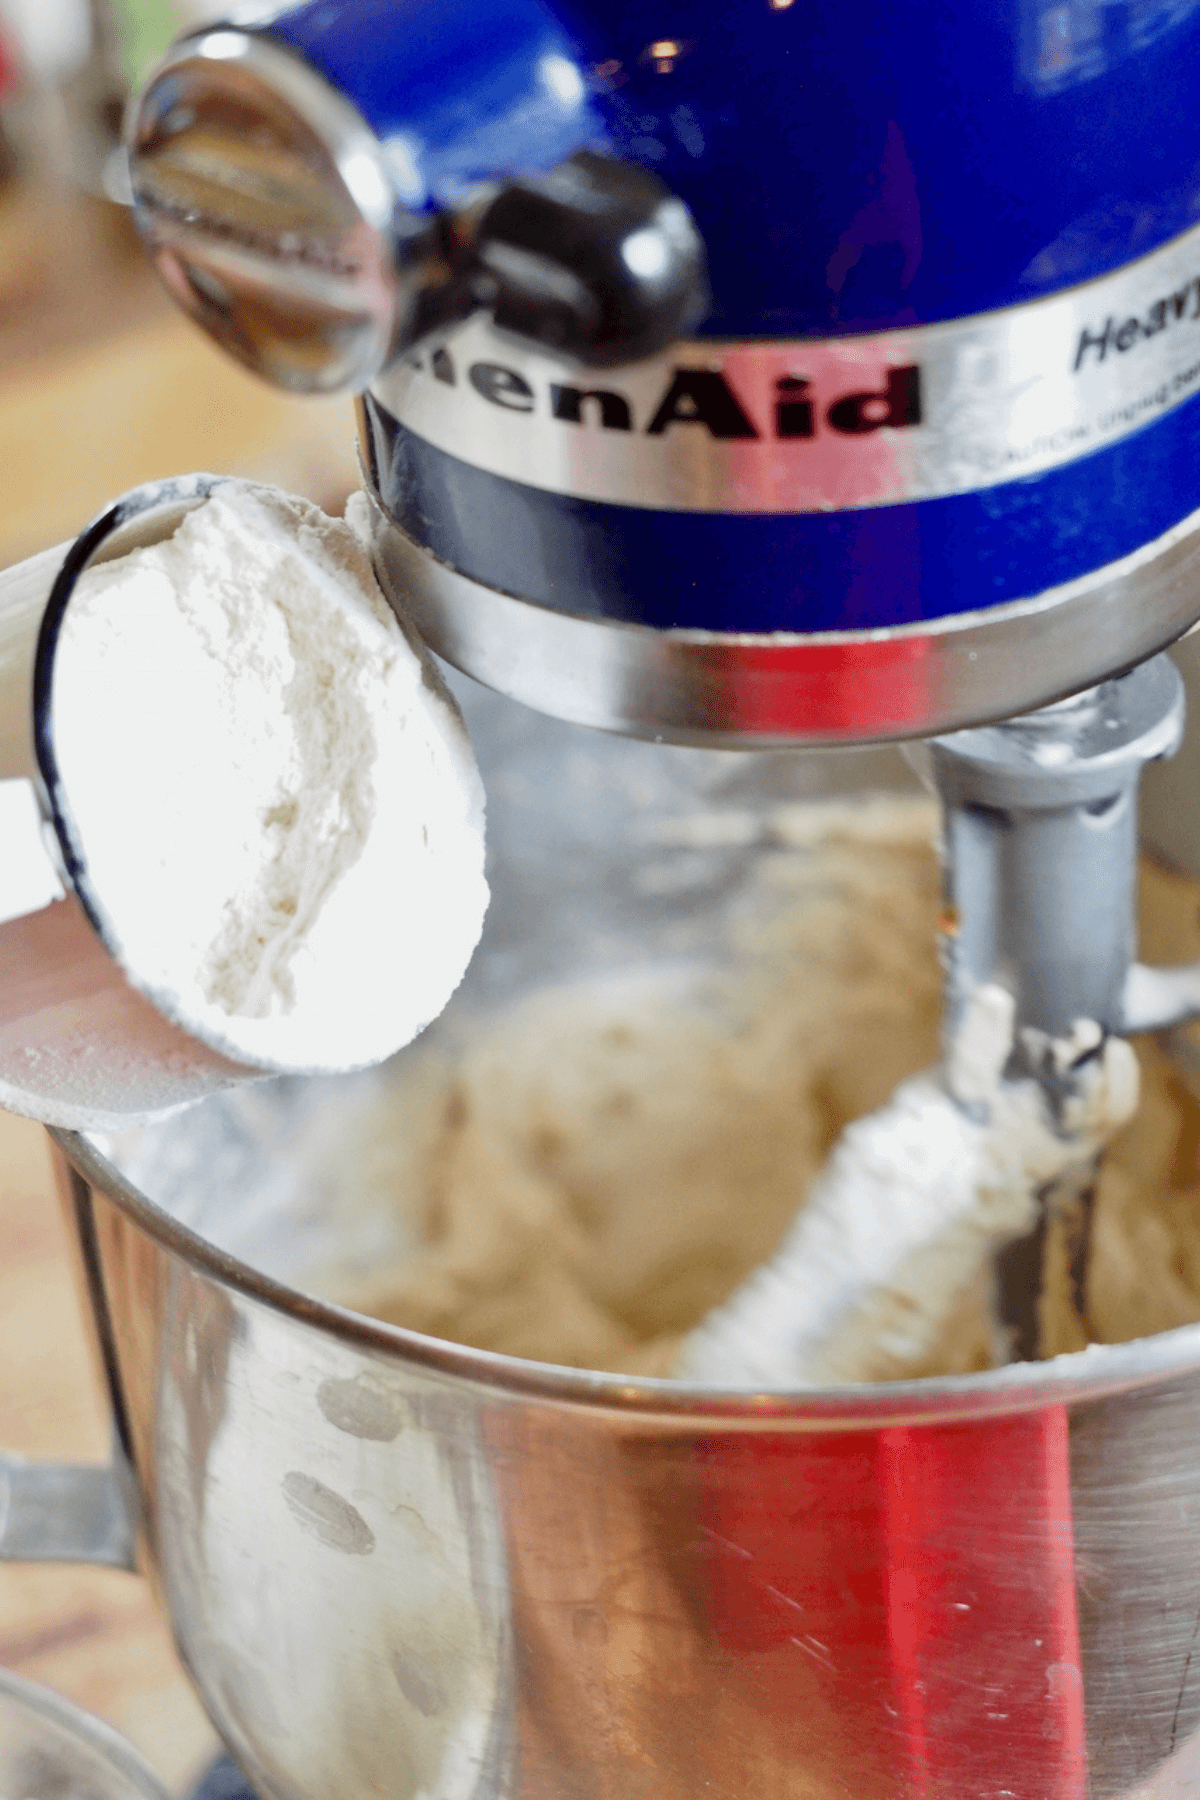 Slowly adding flour mixture into crumbl cookie batter.